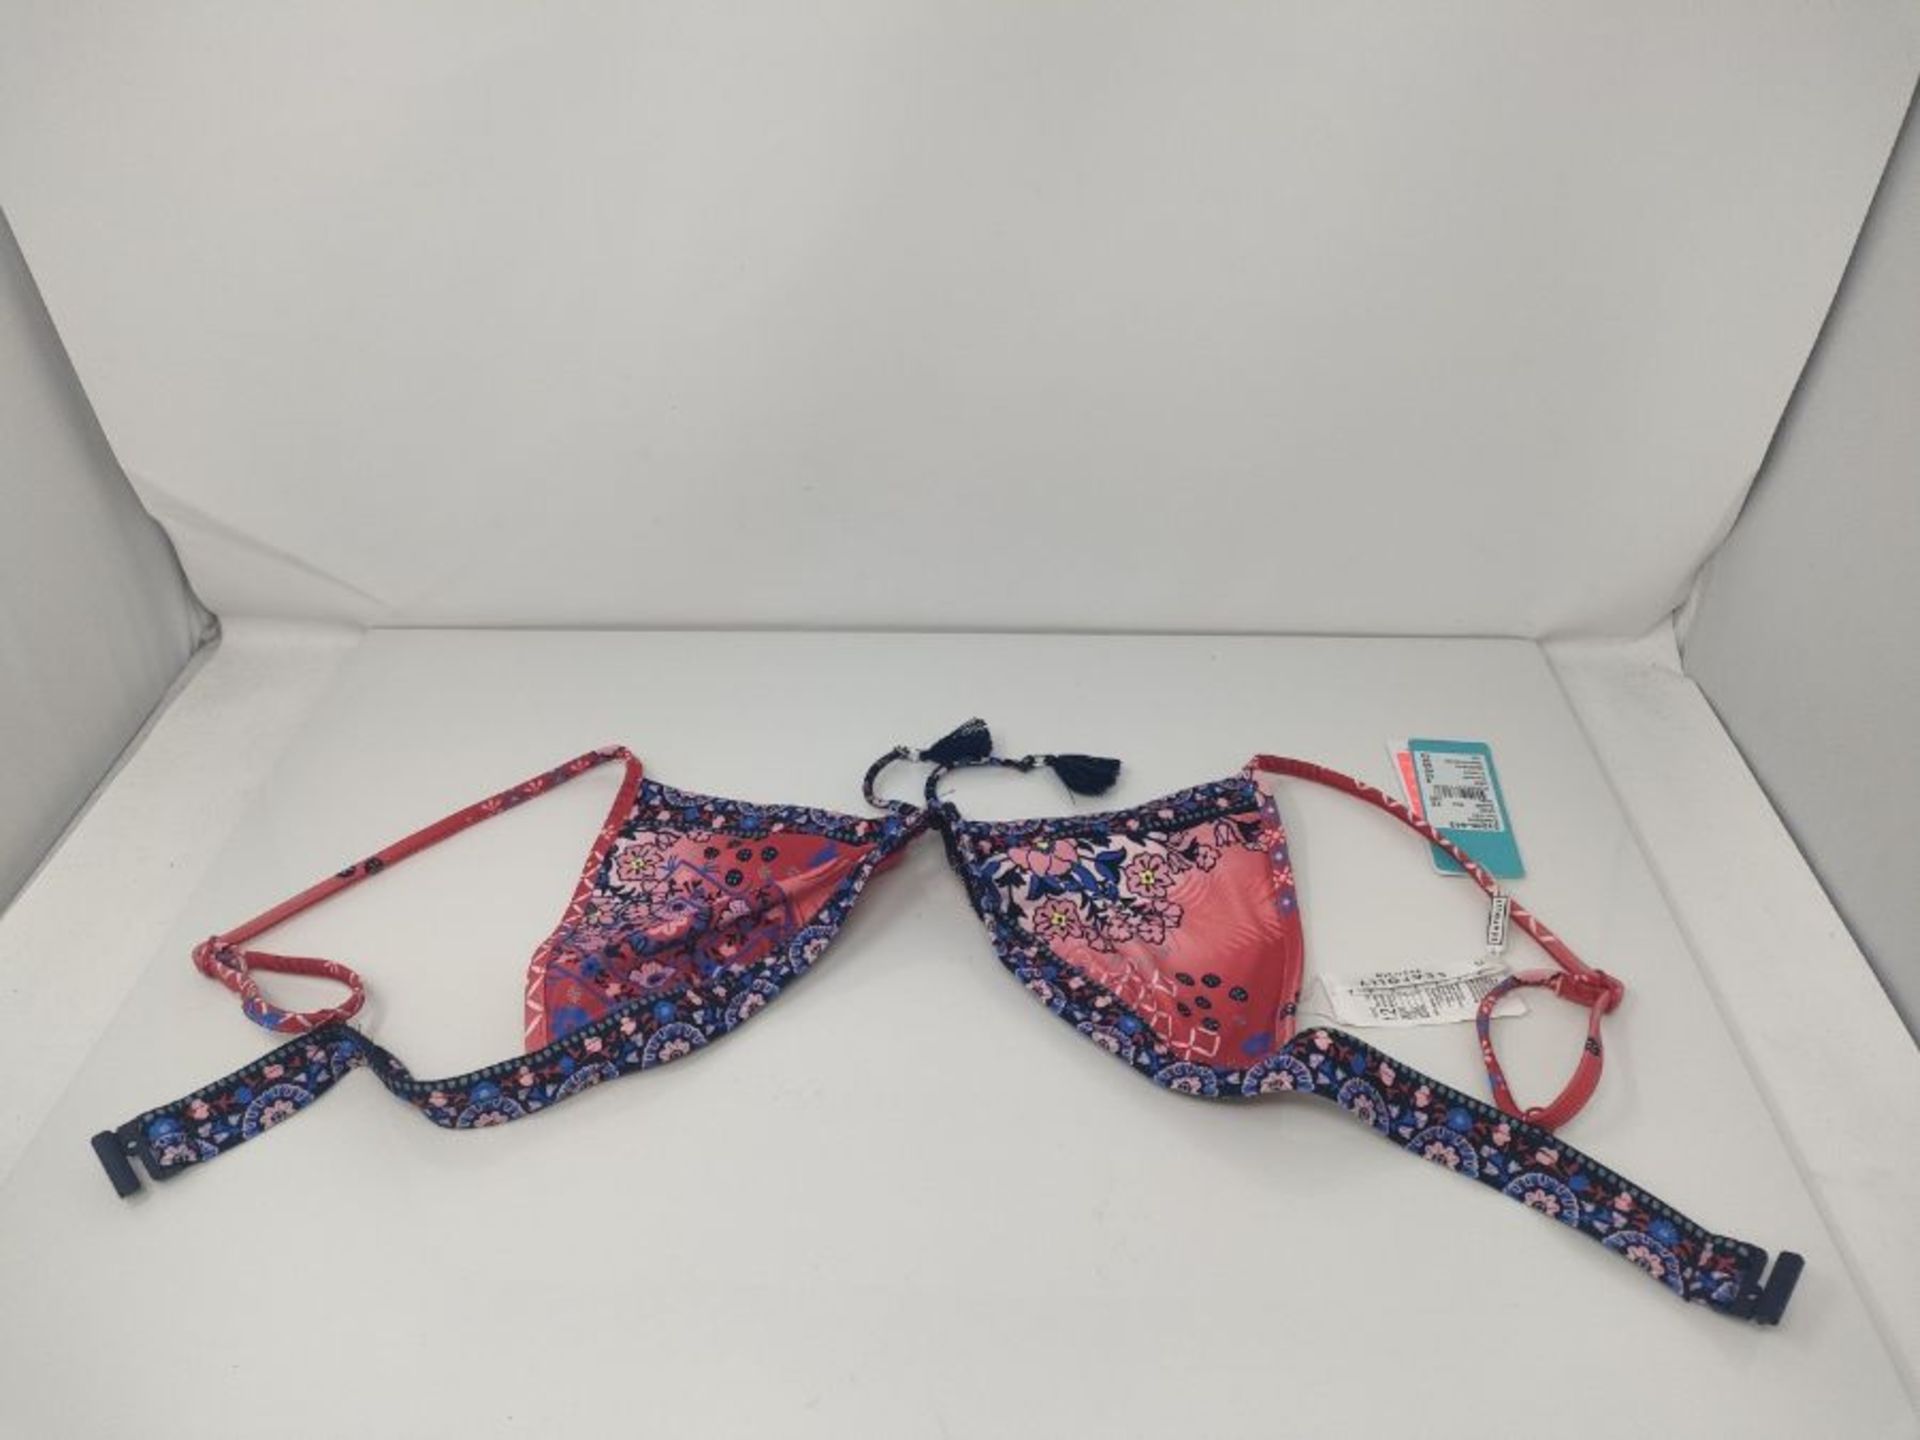 Seafolly Women's Free Spirit Fixed Tri Bra Bikini Top, (Chilli Chilli), 34B (Size: 12) - Image 2 of 6